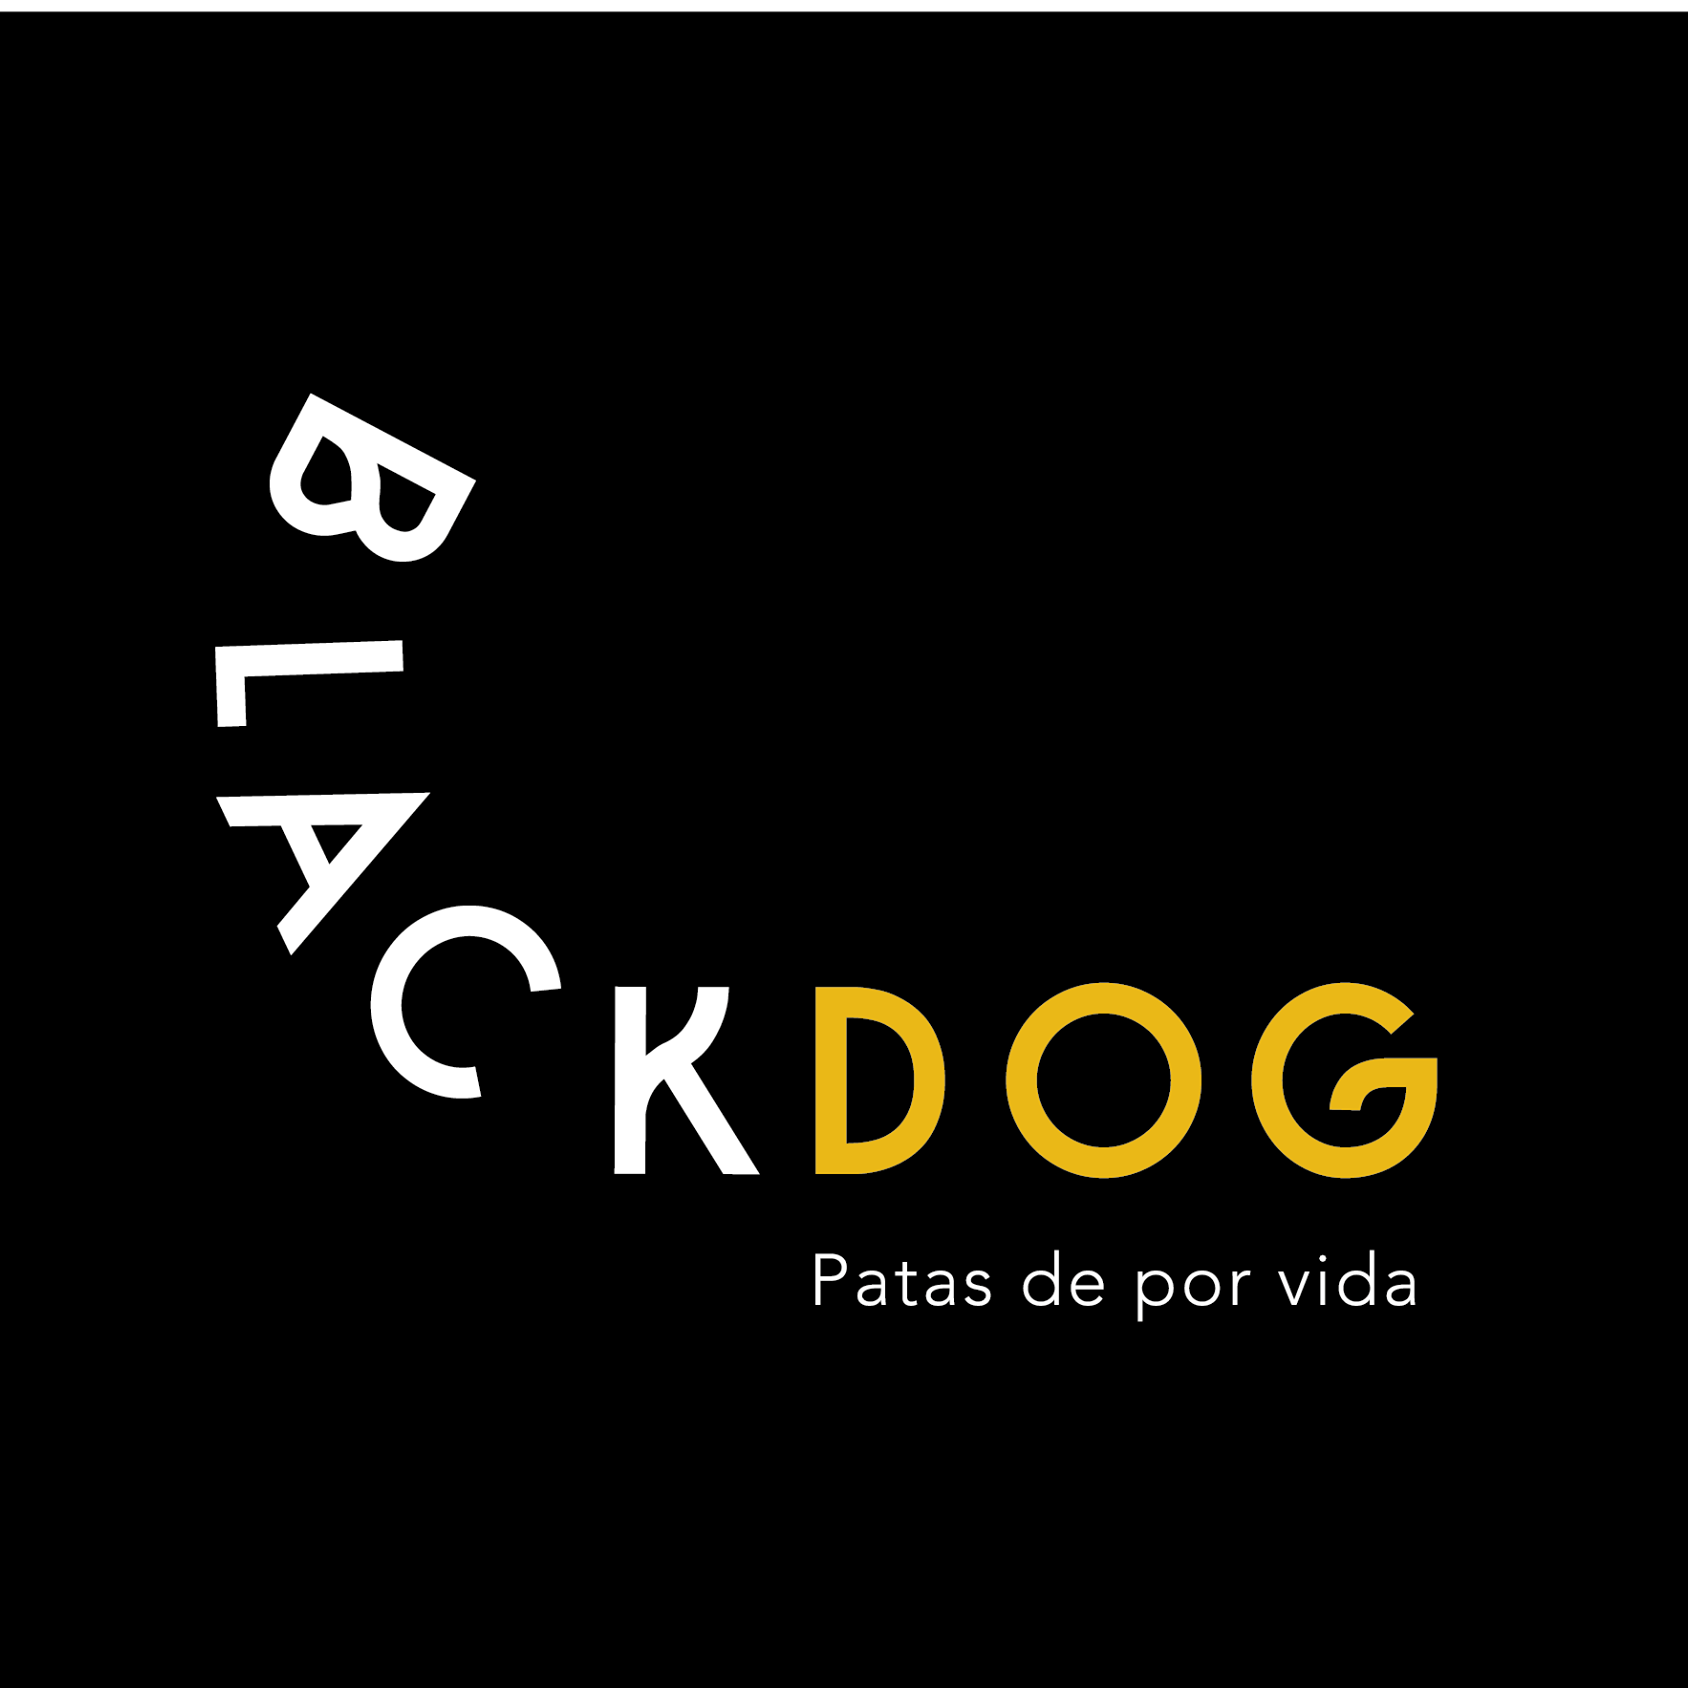 Blackdog (1)